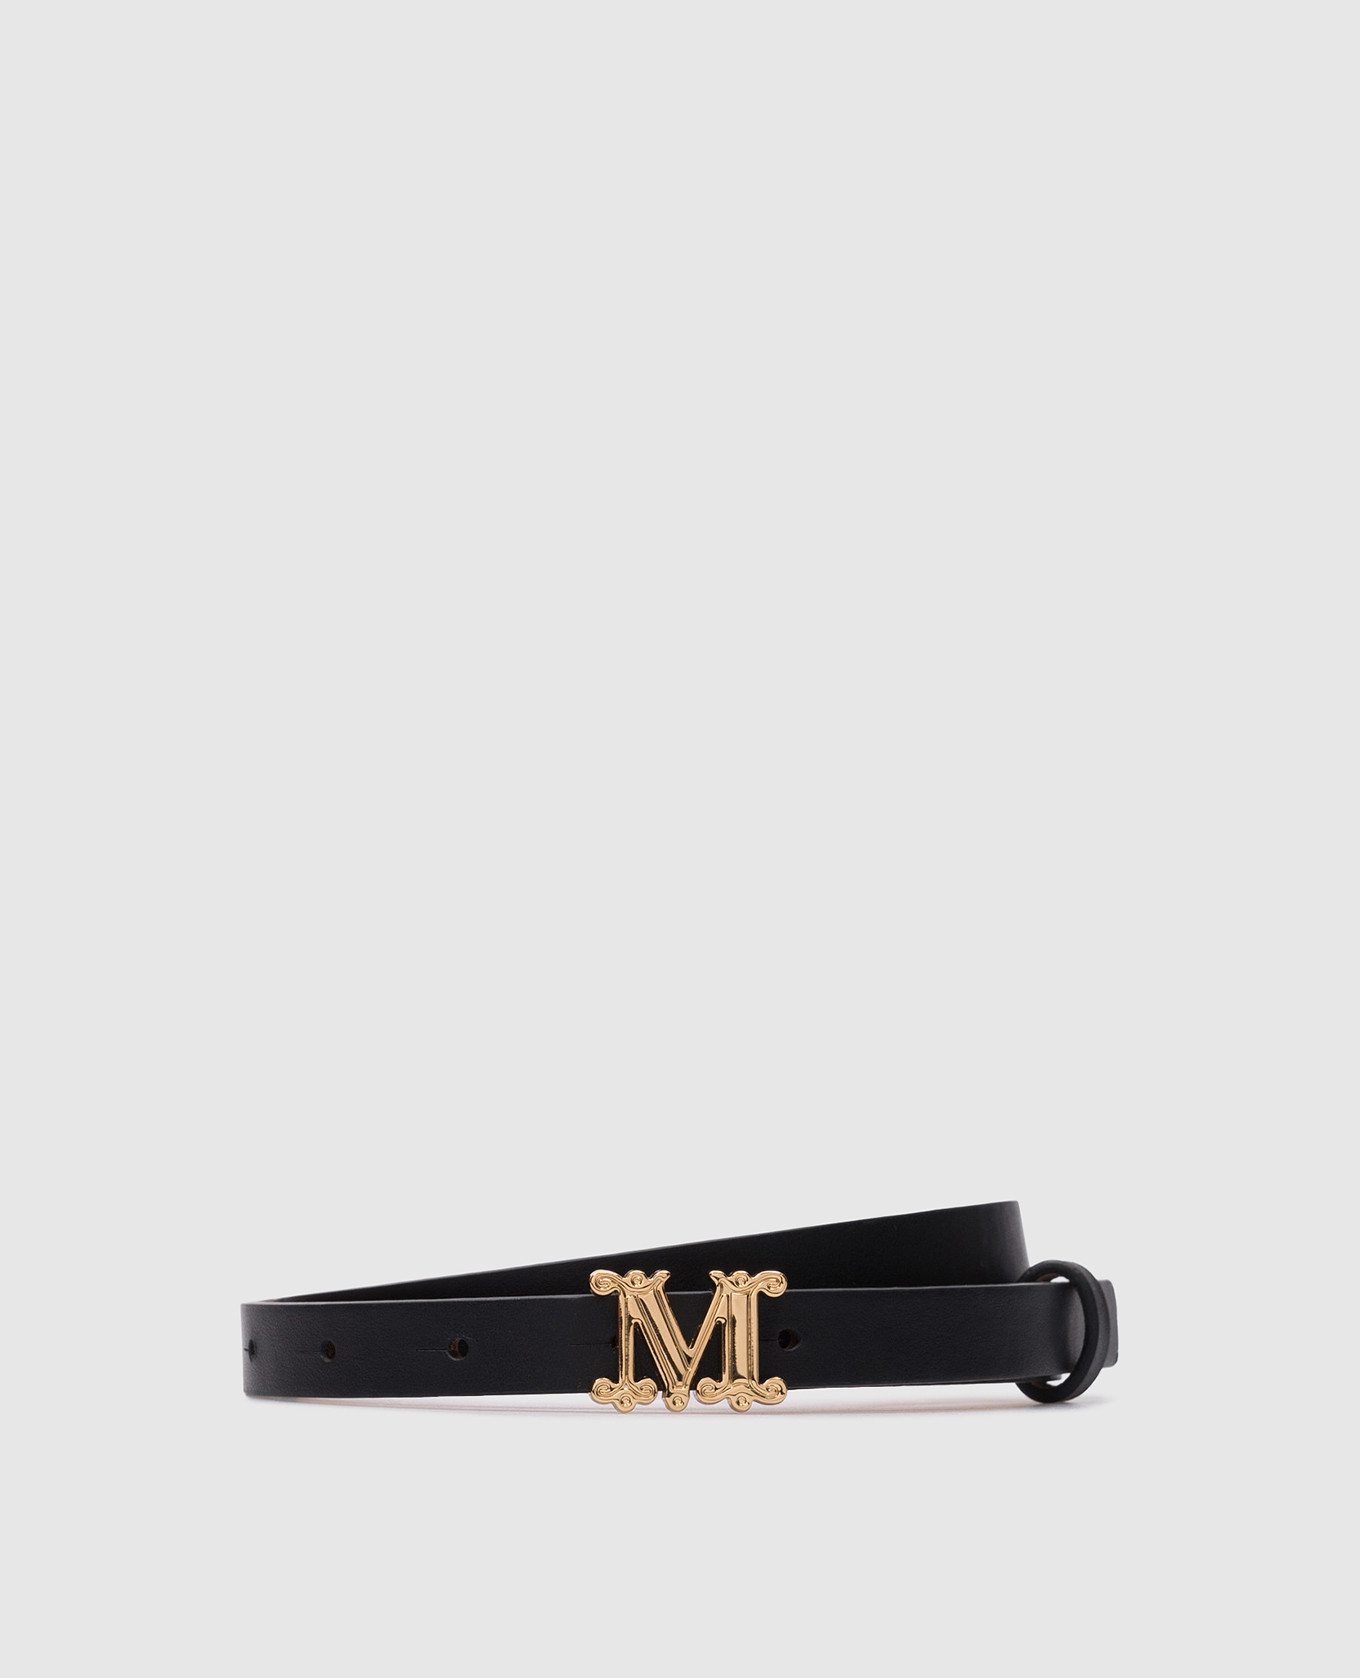 MGRAZIATA black leather belt with metal logo